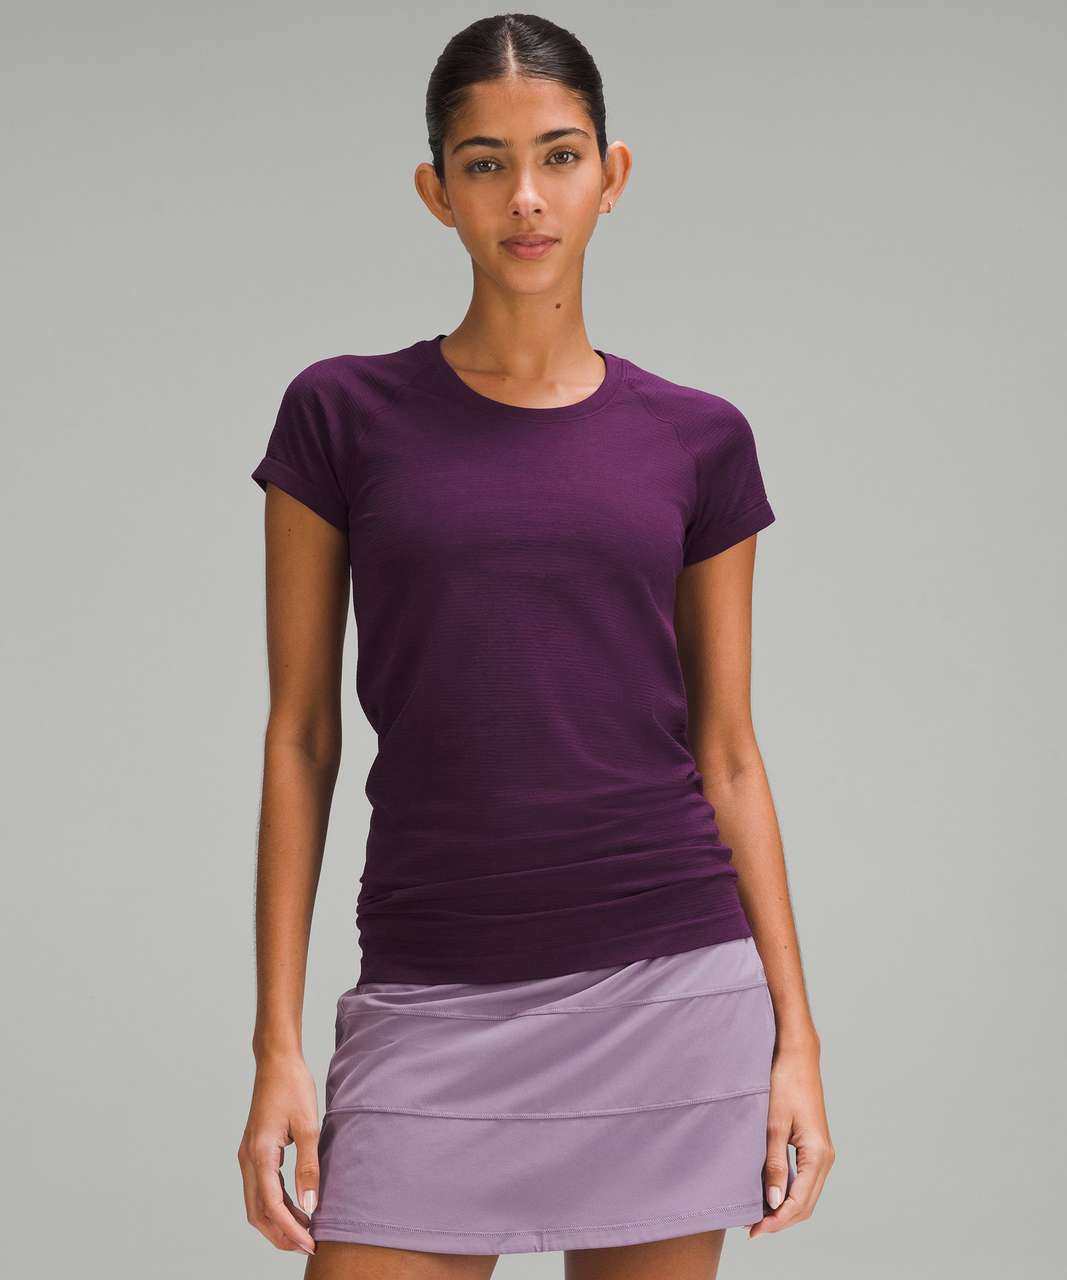 Lululemon Swiftly Tech Short Sleeve Shirt 2.0 - Magenta Purple